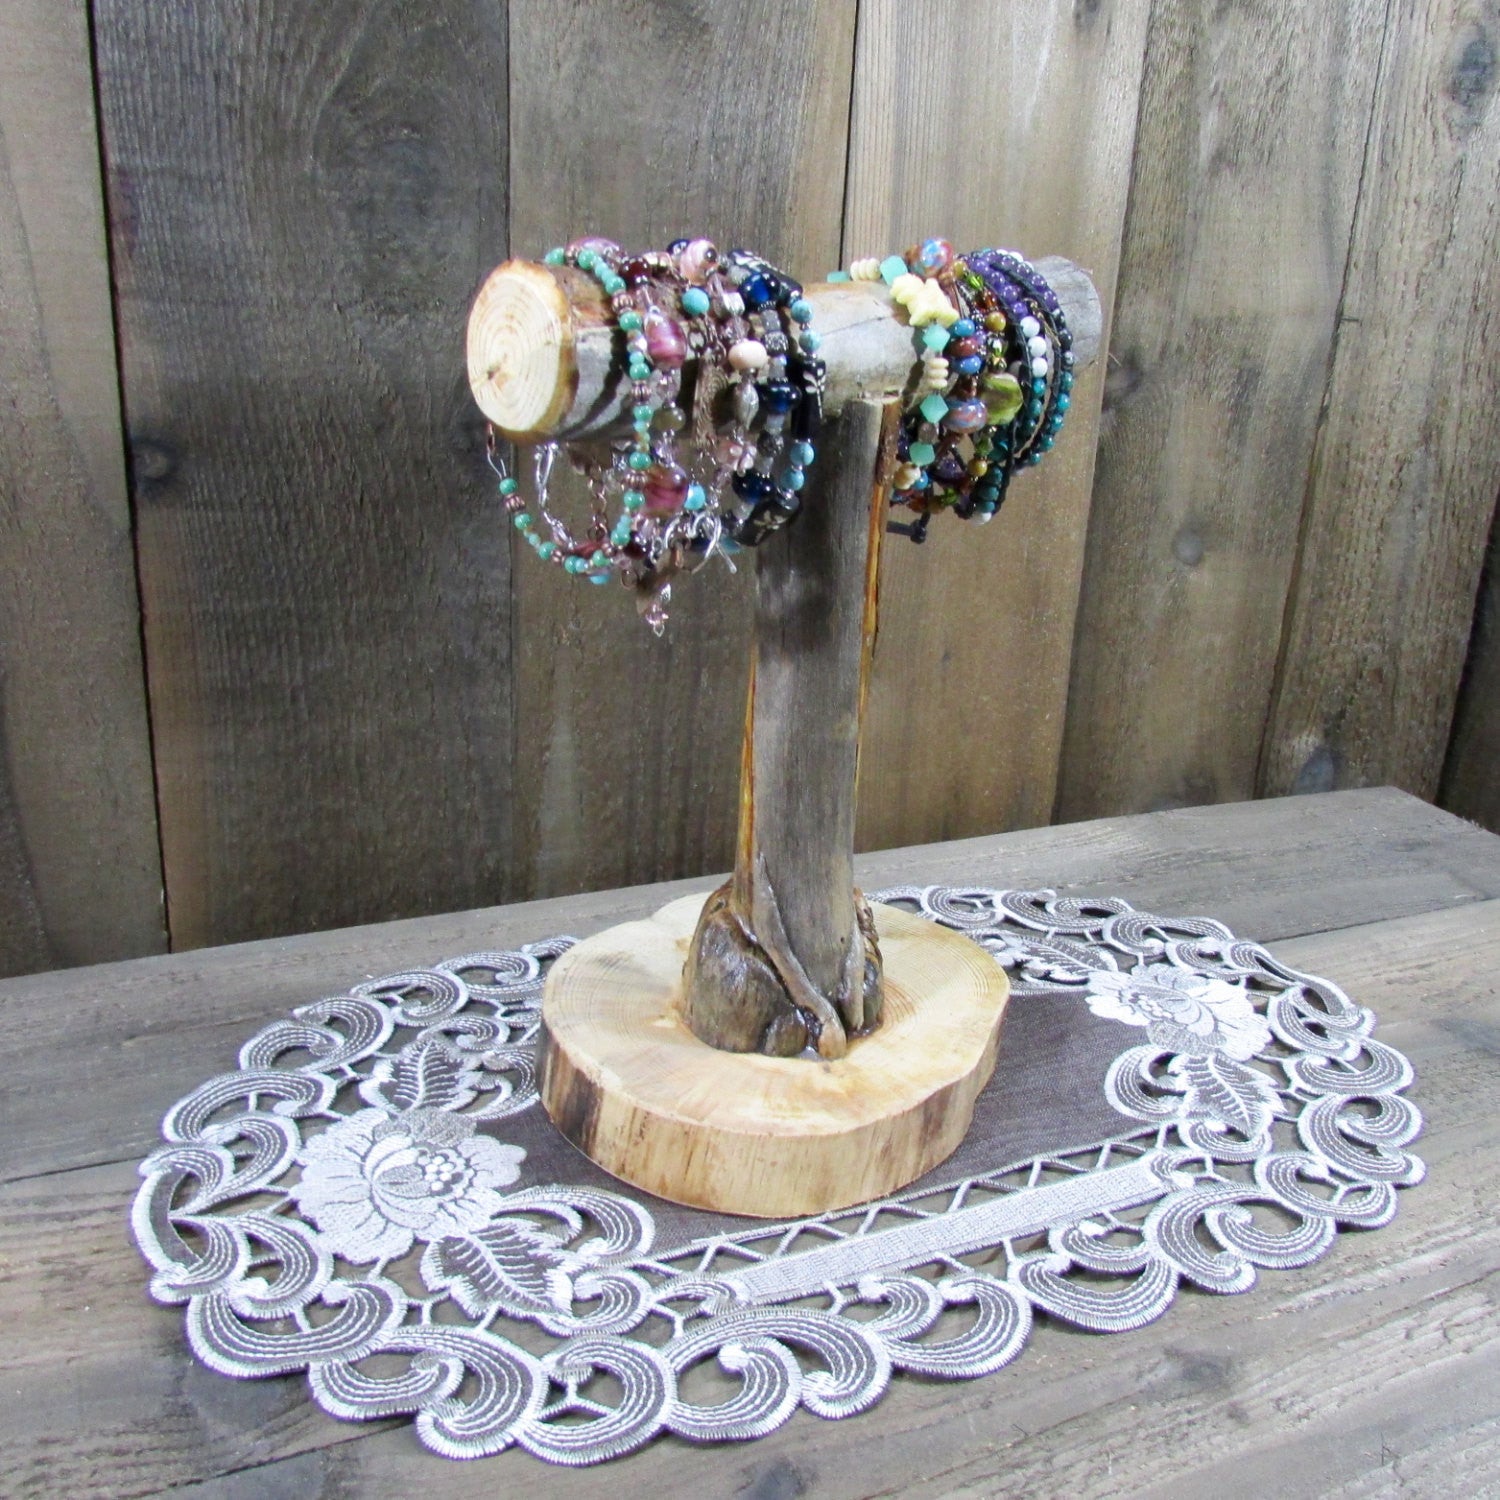 Bracelet Display T Bar Jewelry - Rustic Reclaimed Wood Lodgepole Pine Tree Limbs